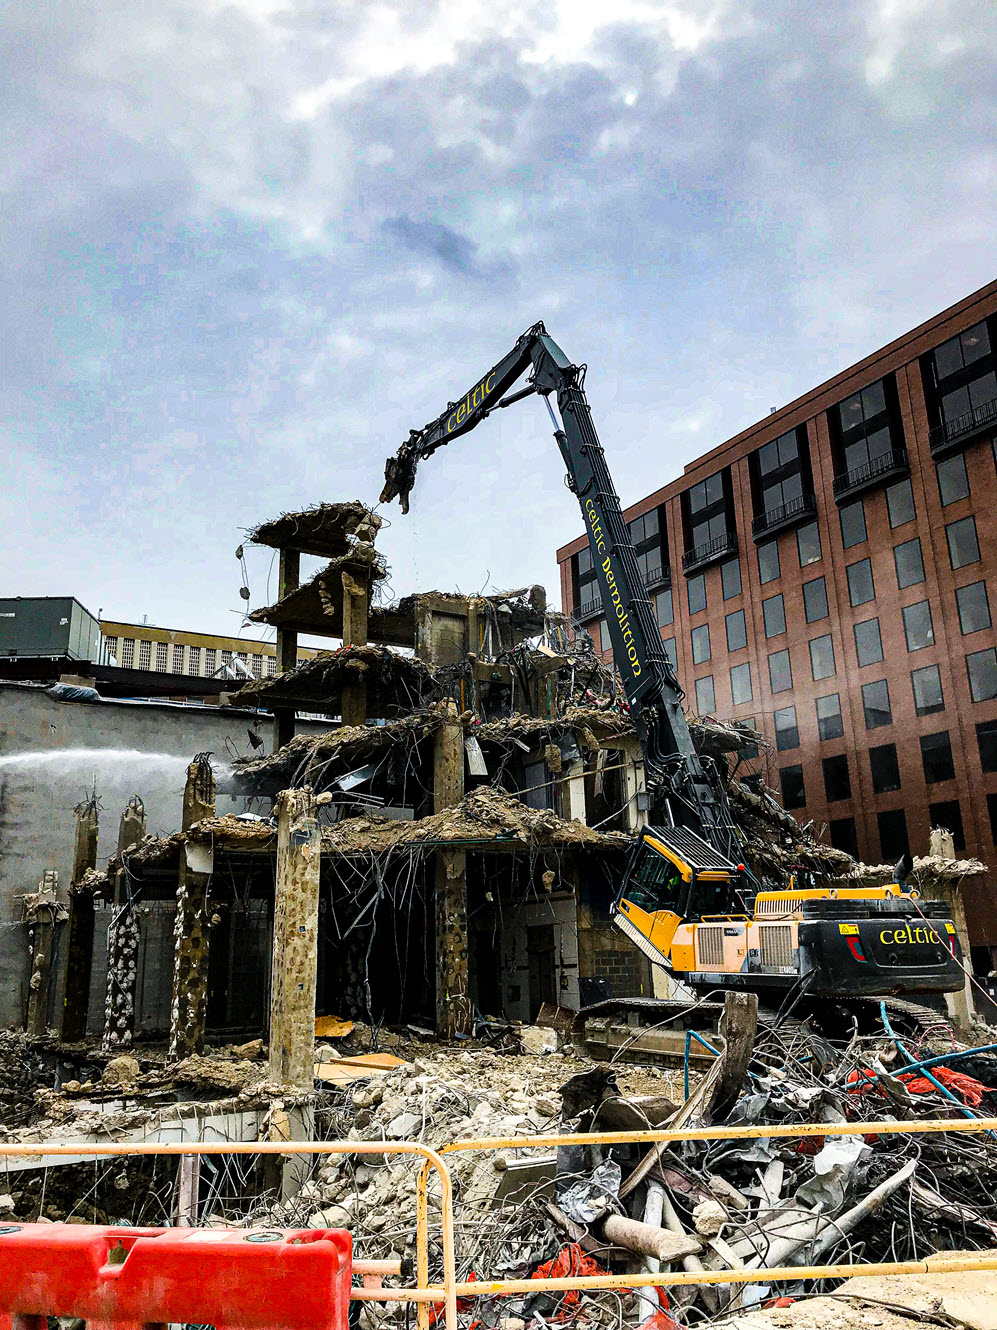 Celtic Demolition - Razing Image 3